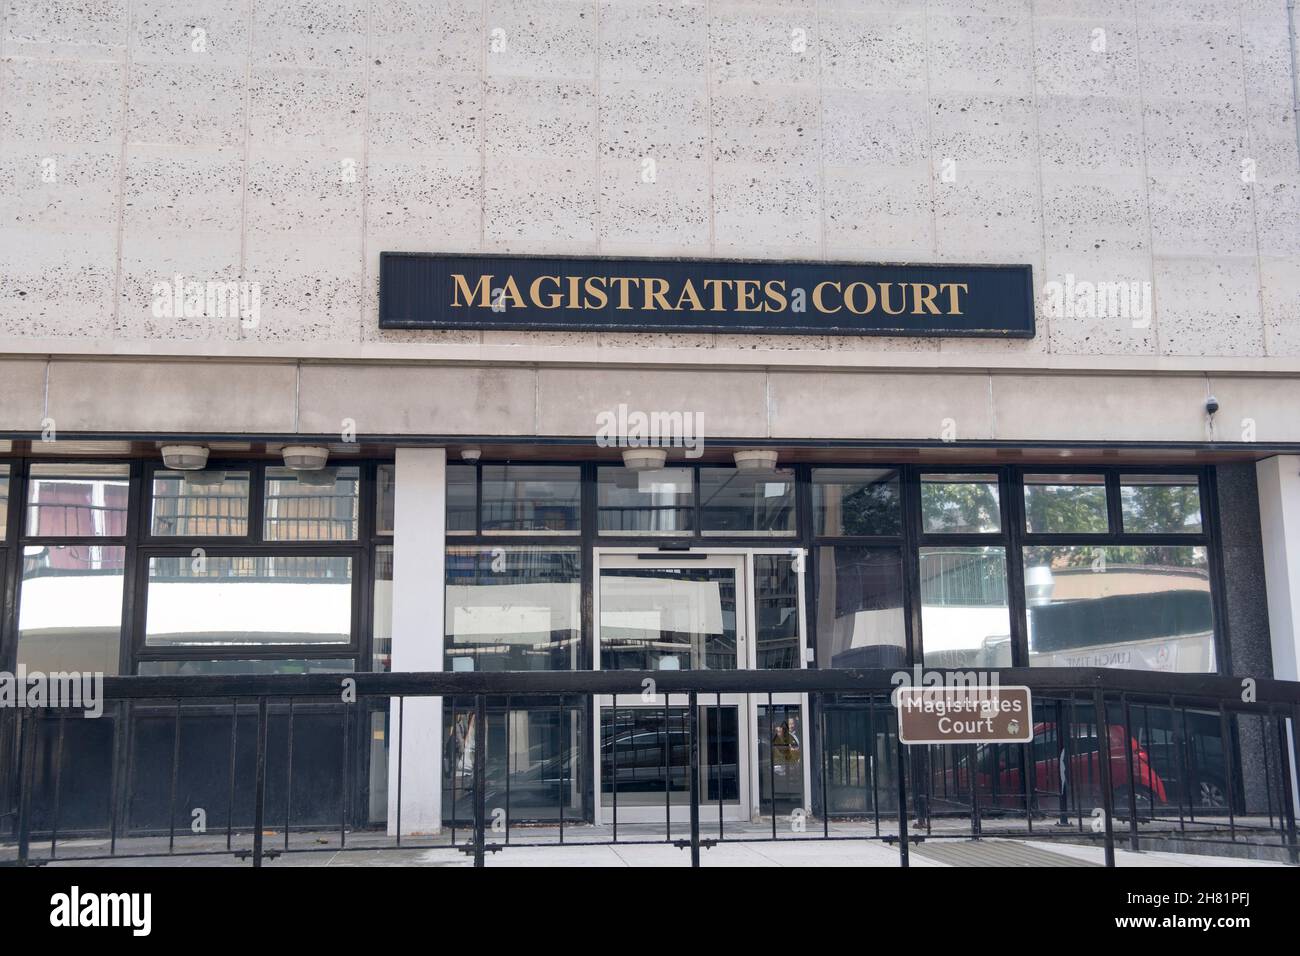 St Albans Magistrates Court entrance, St Albans, Hertfordhshire, UK. Stock Photo